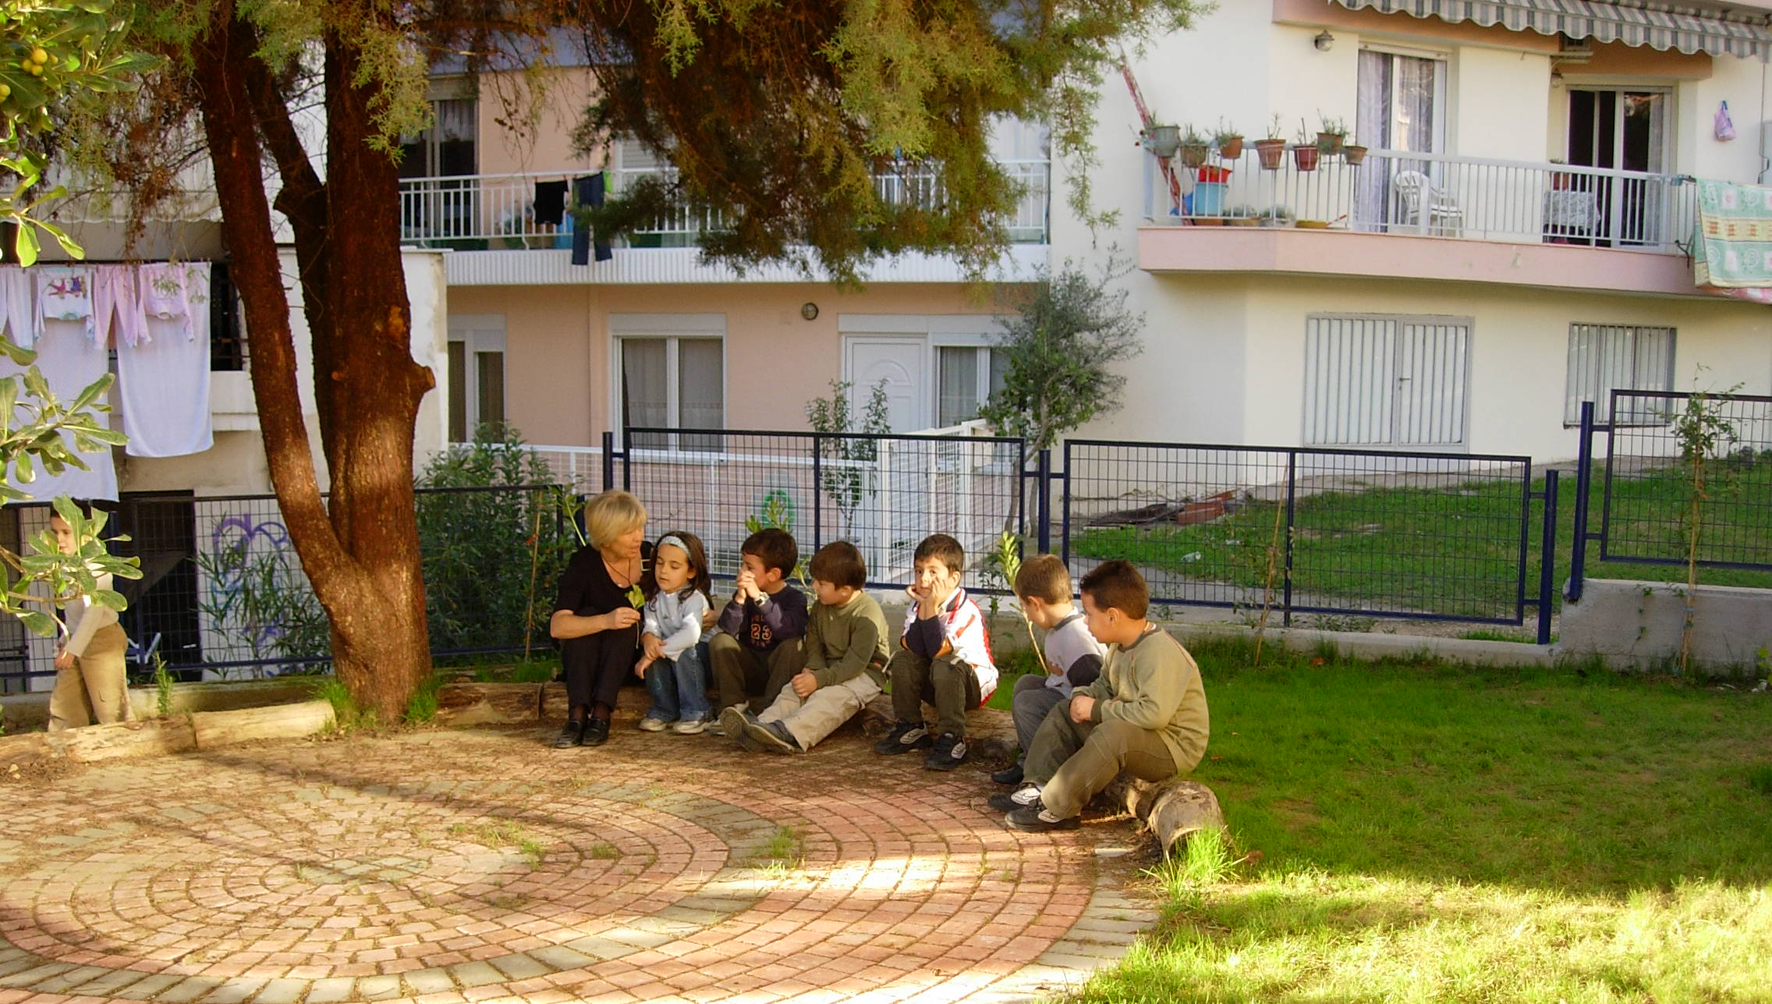 The open classromm in the schoolyard. 